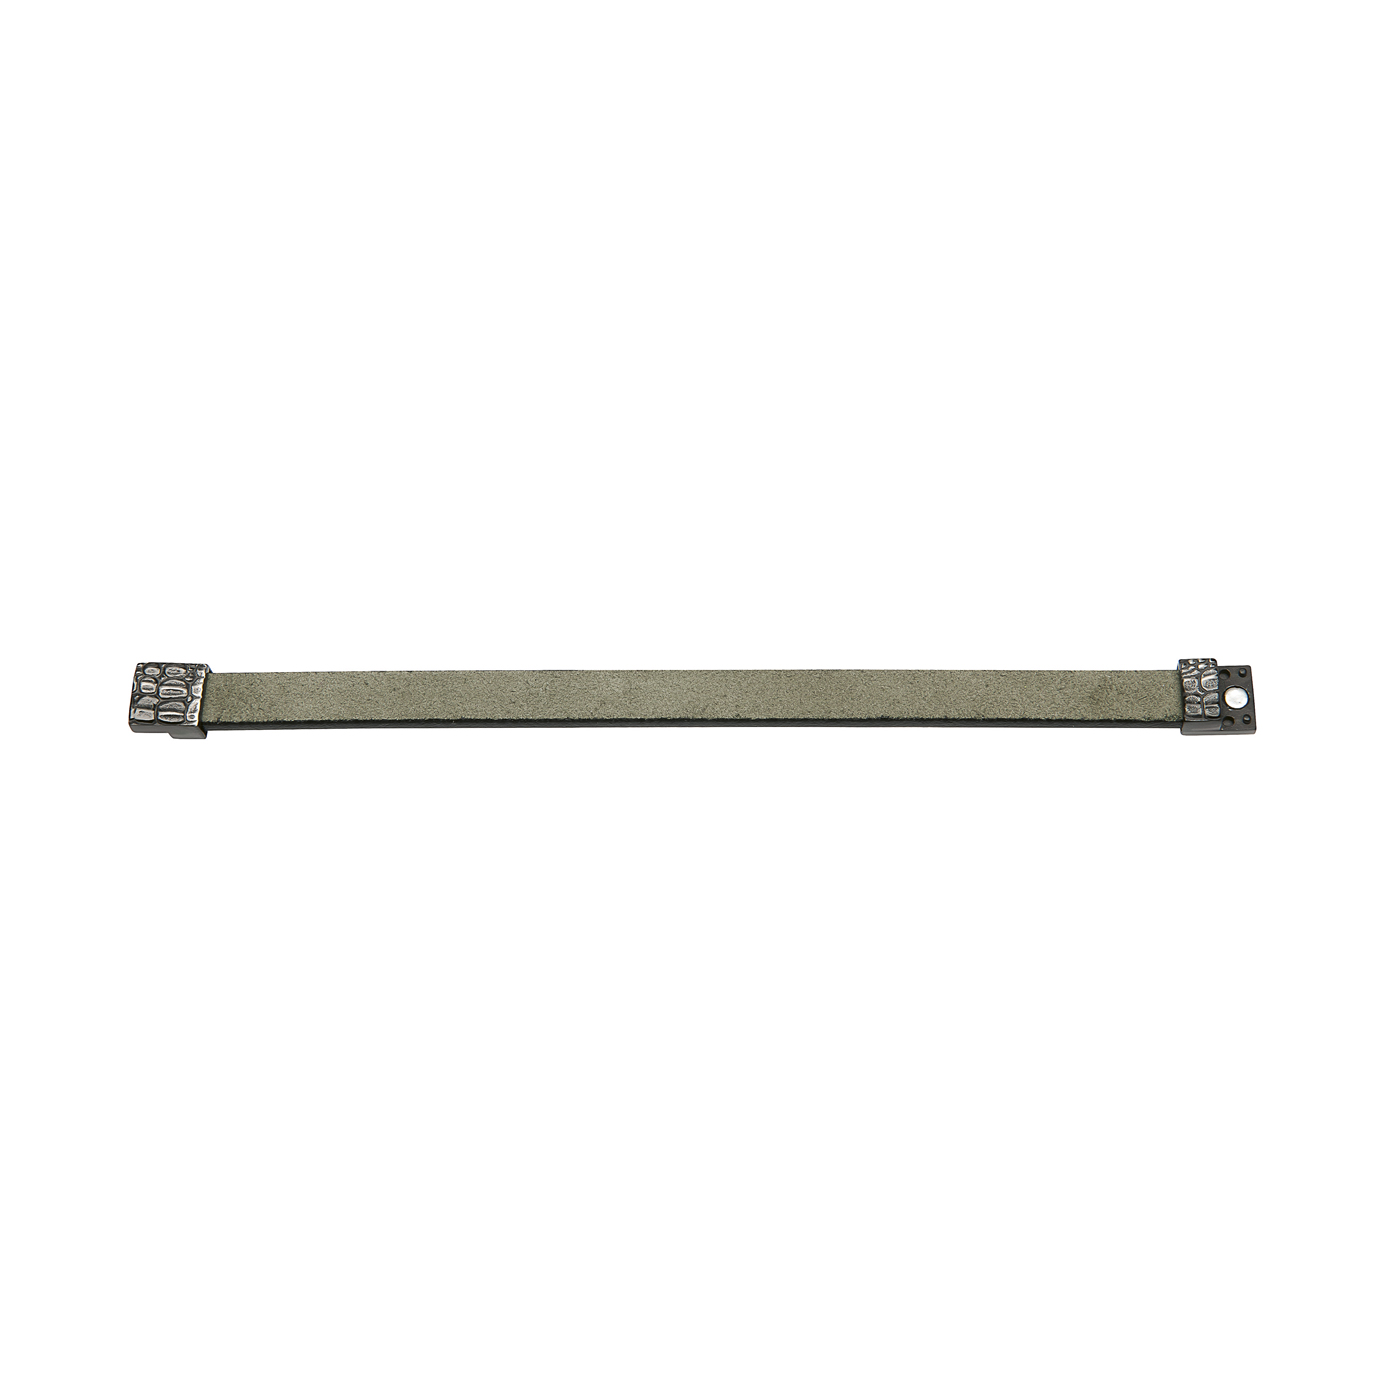 Suede Bracelet, Green, Length 19 cm - 1 piece